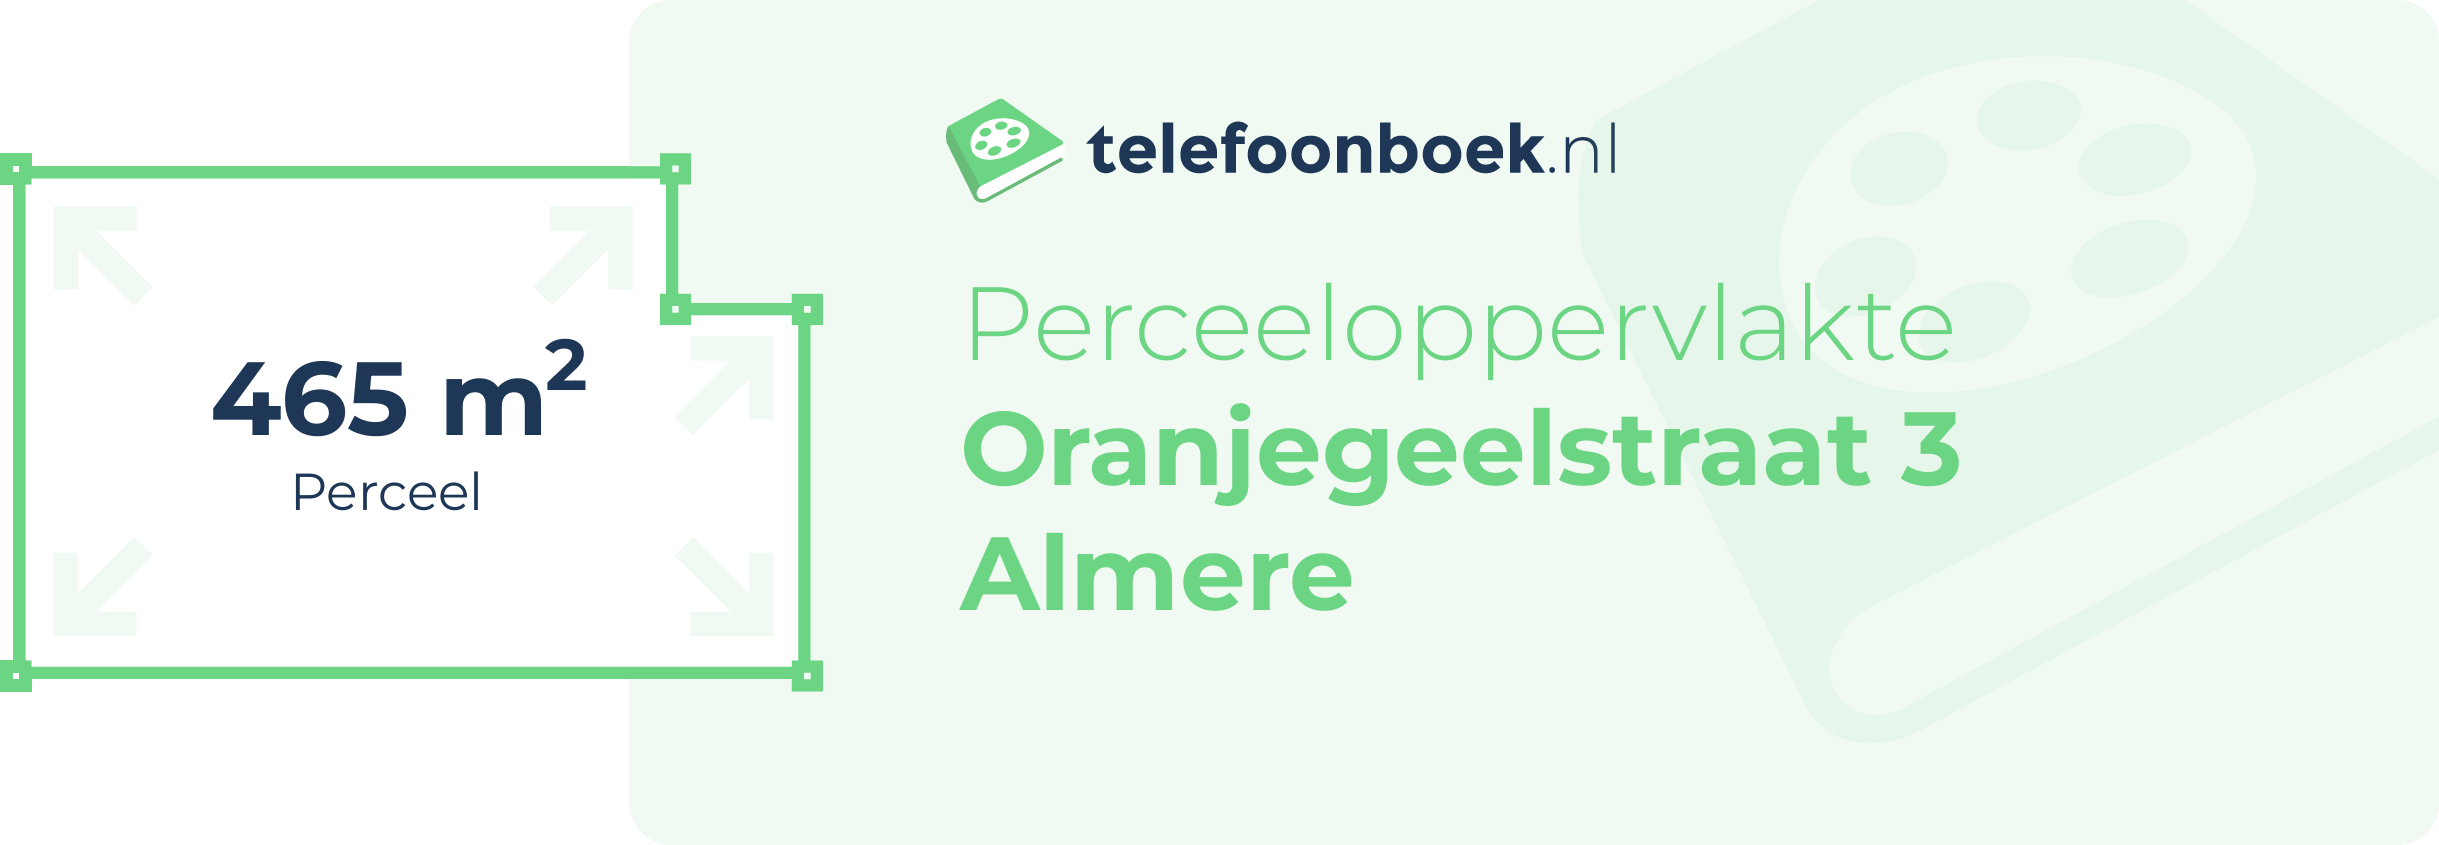 Perceeloppervlakte Oranjegeelstraat 3 Almere